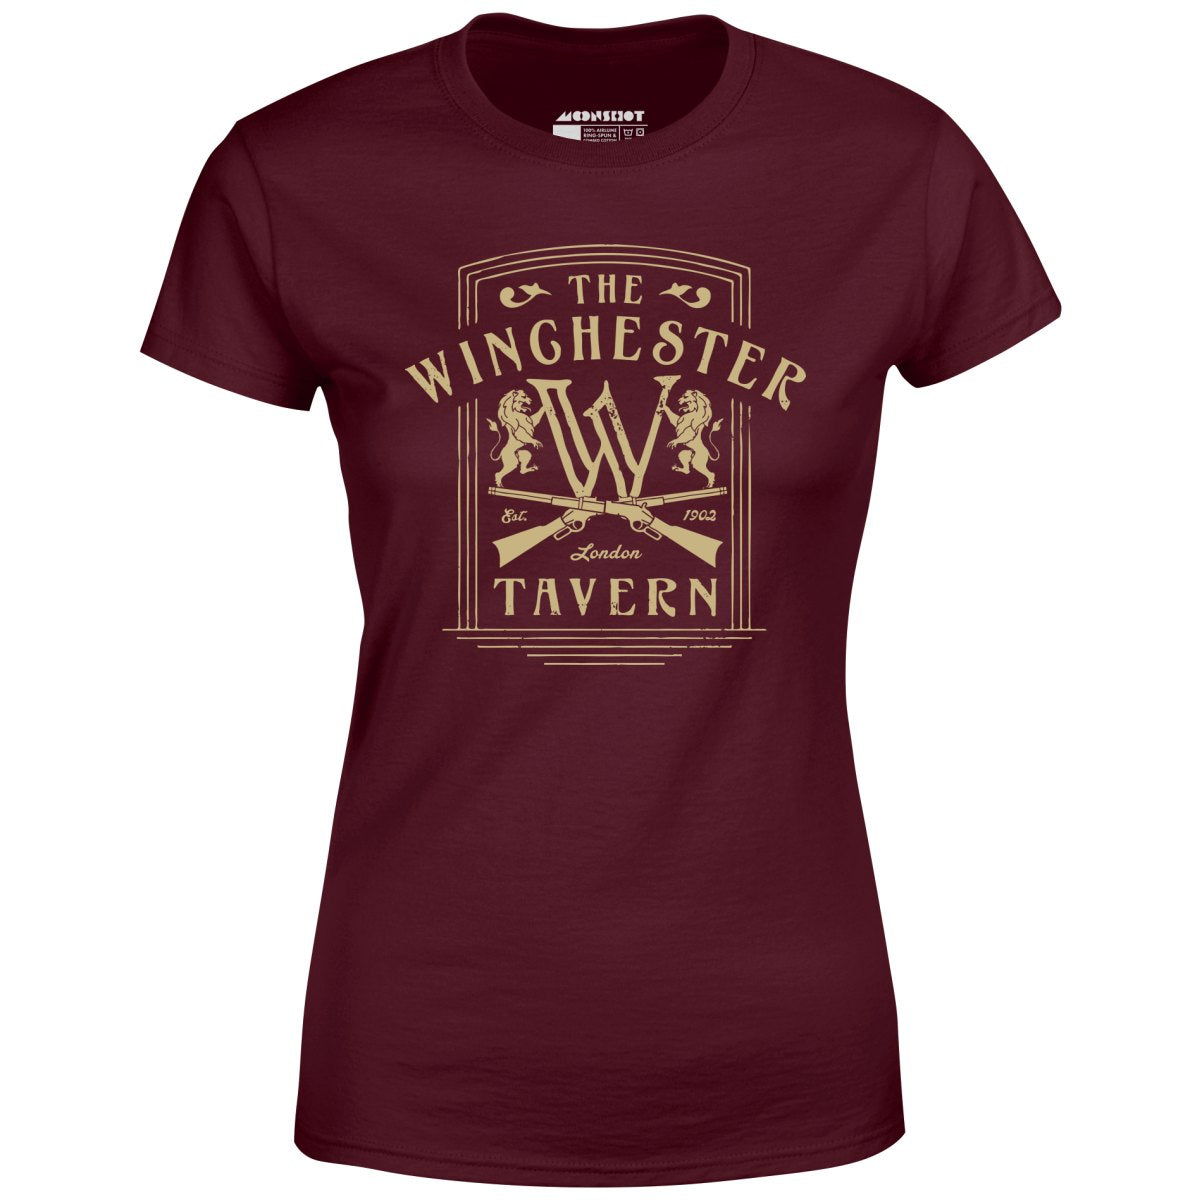 The Winchester Tavern - Shaun of the Dead - Women's T-Shirt